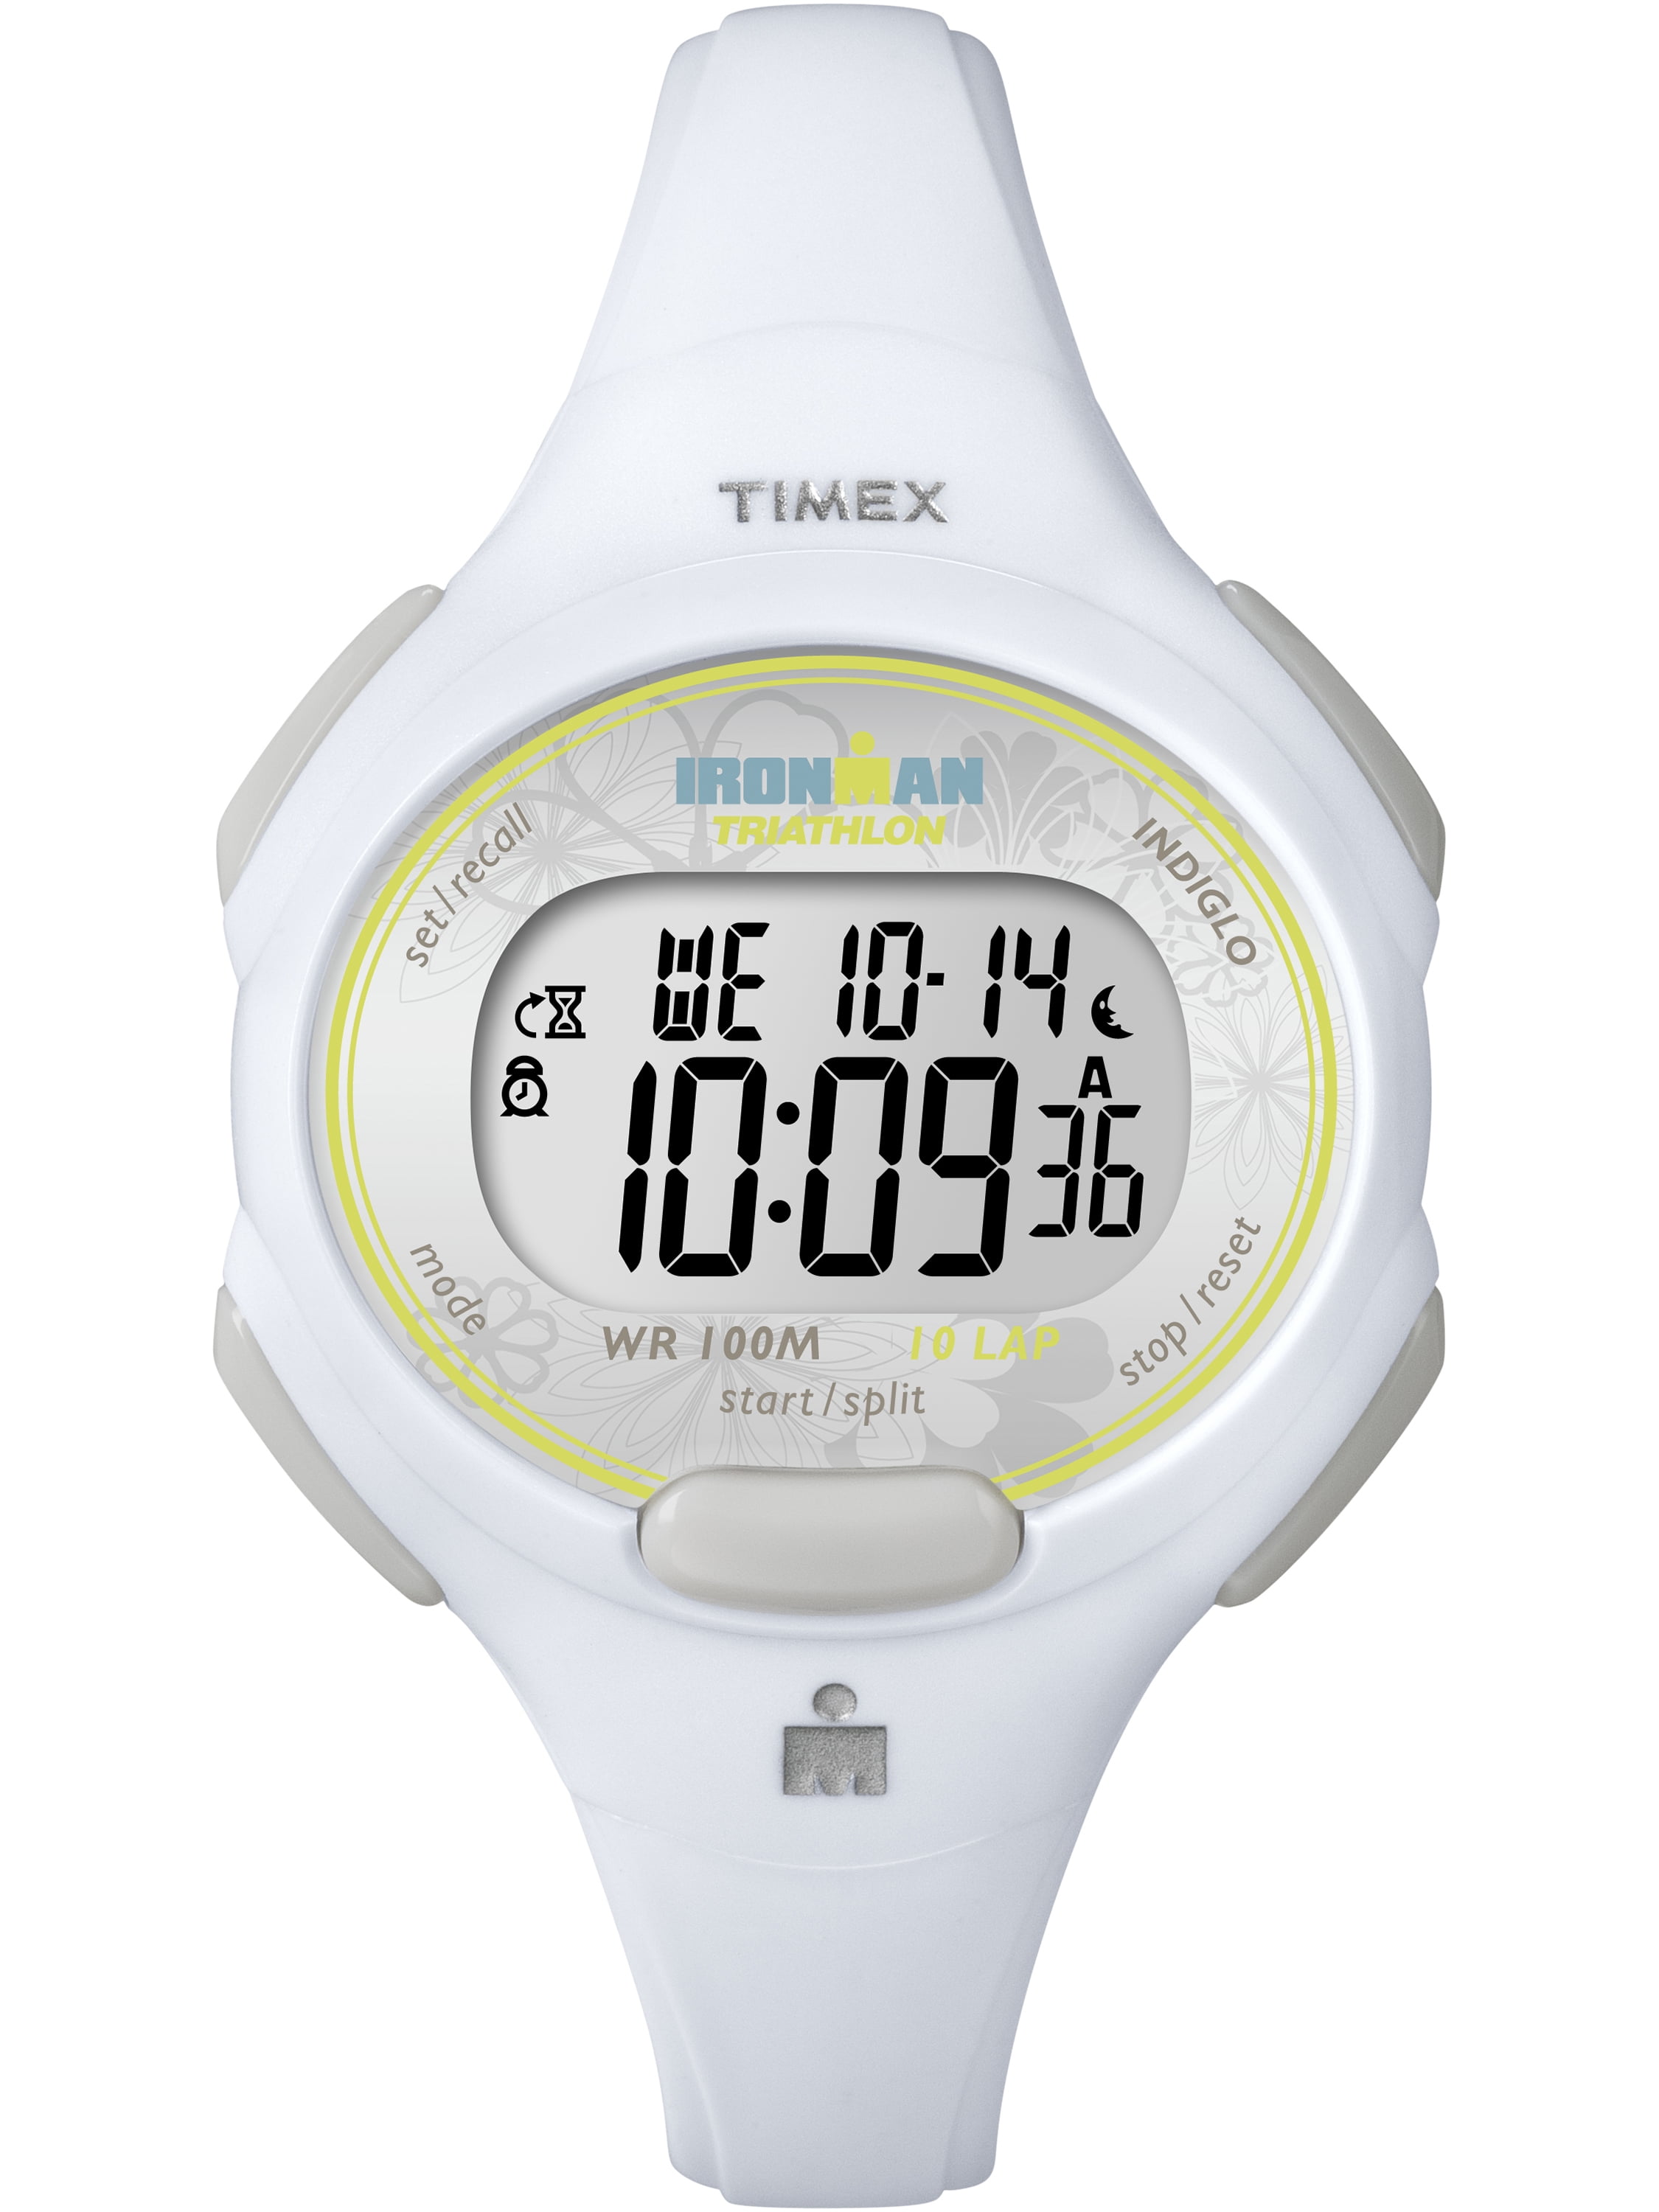 TIMEX Women's IRONMAN Essential 10 White 34mm Sport Watch, Resin Strap -  